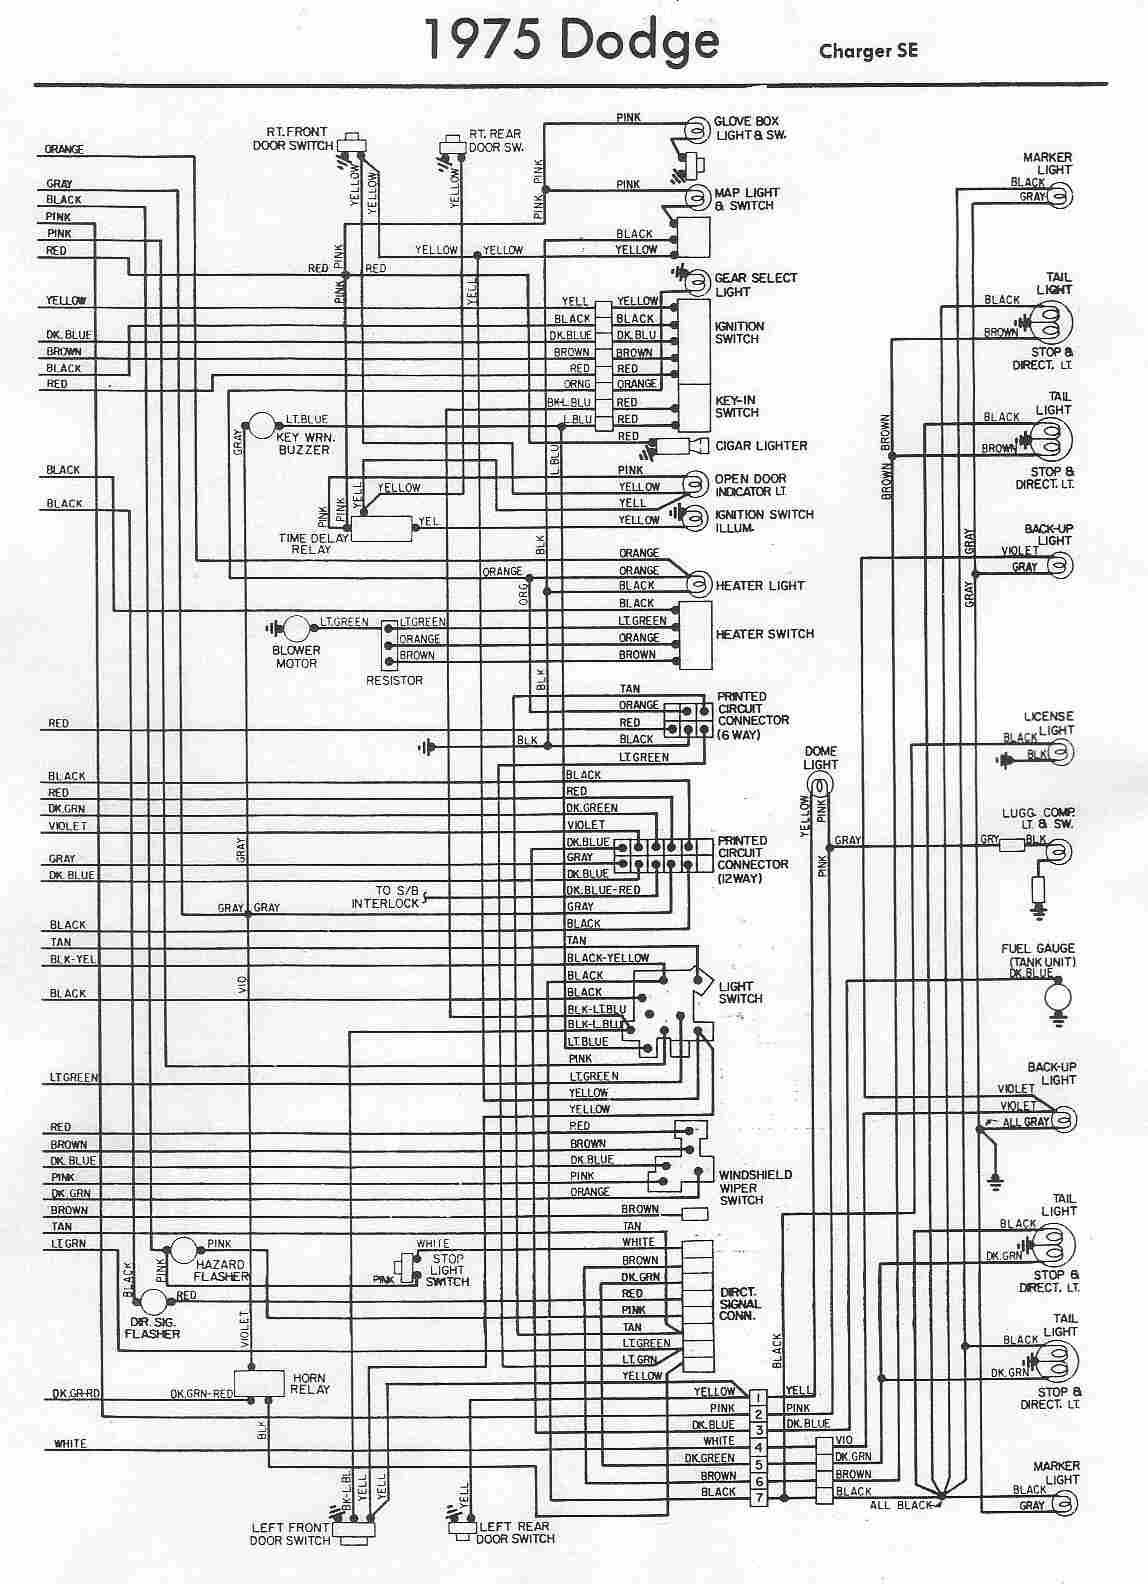 DODGE - Car PDF Manual, Wiring Diagram & Fault Codes DTC  1979 Dodge Aspen Wiring Diagram    automotive-manuals.net